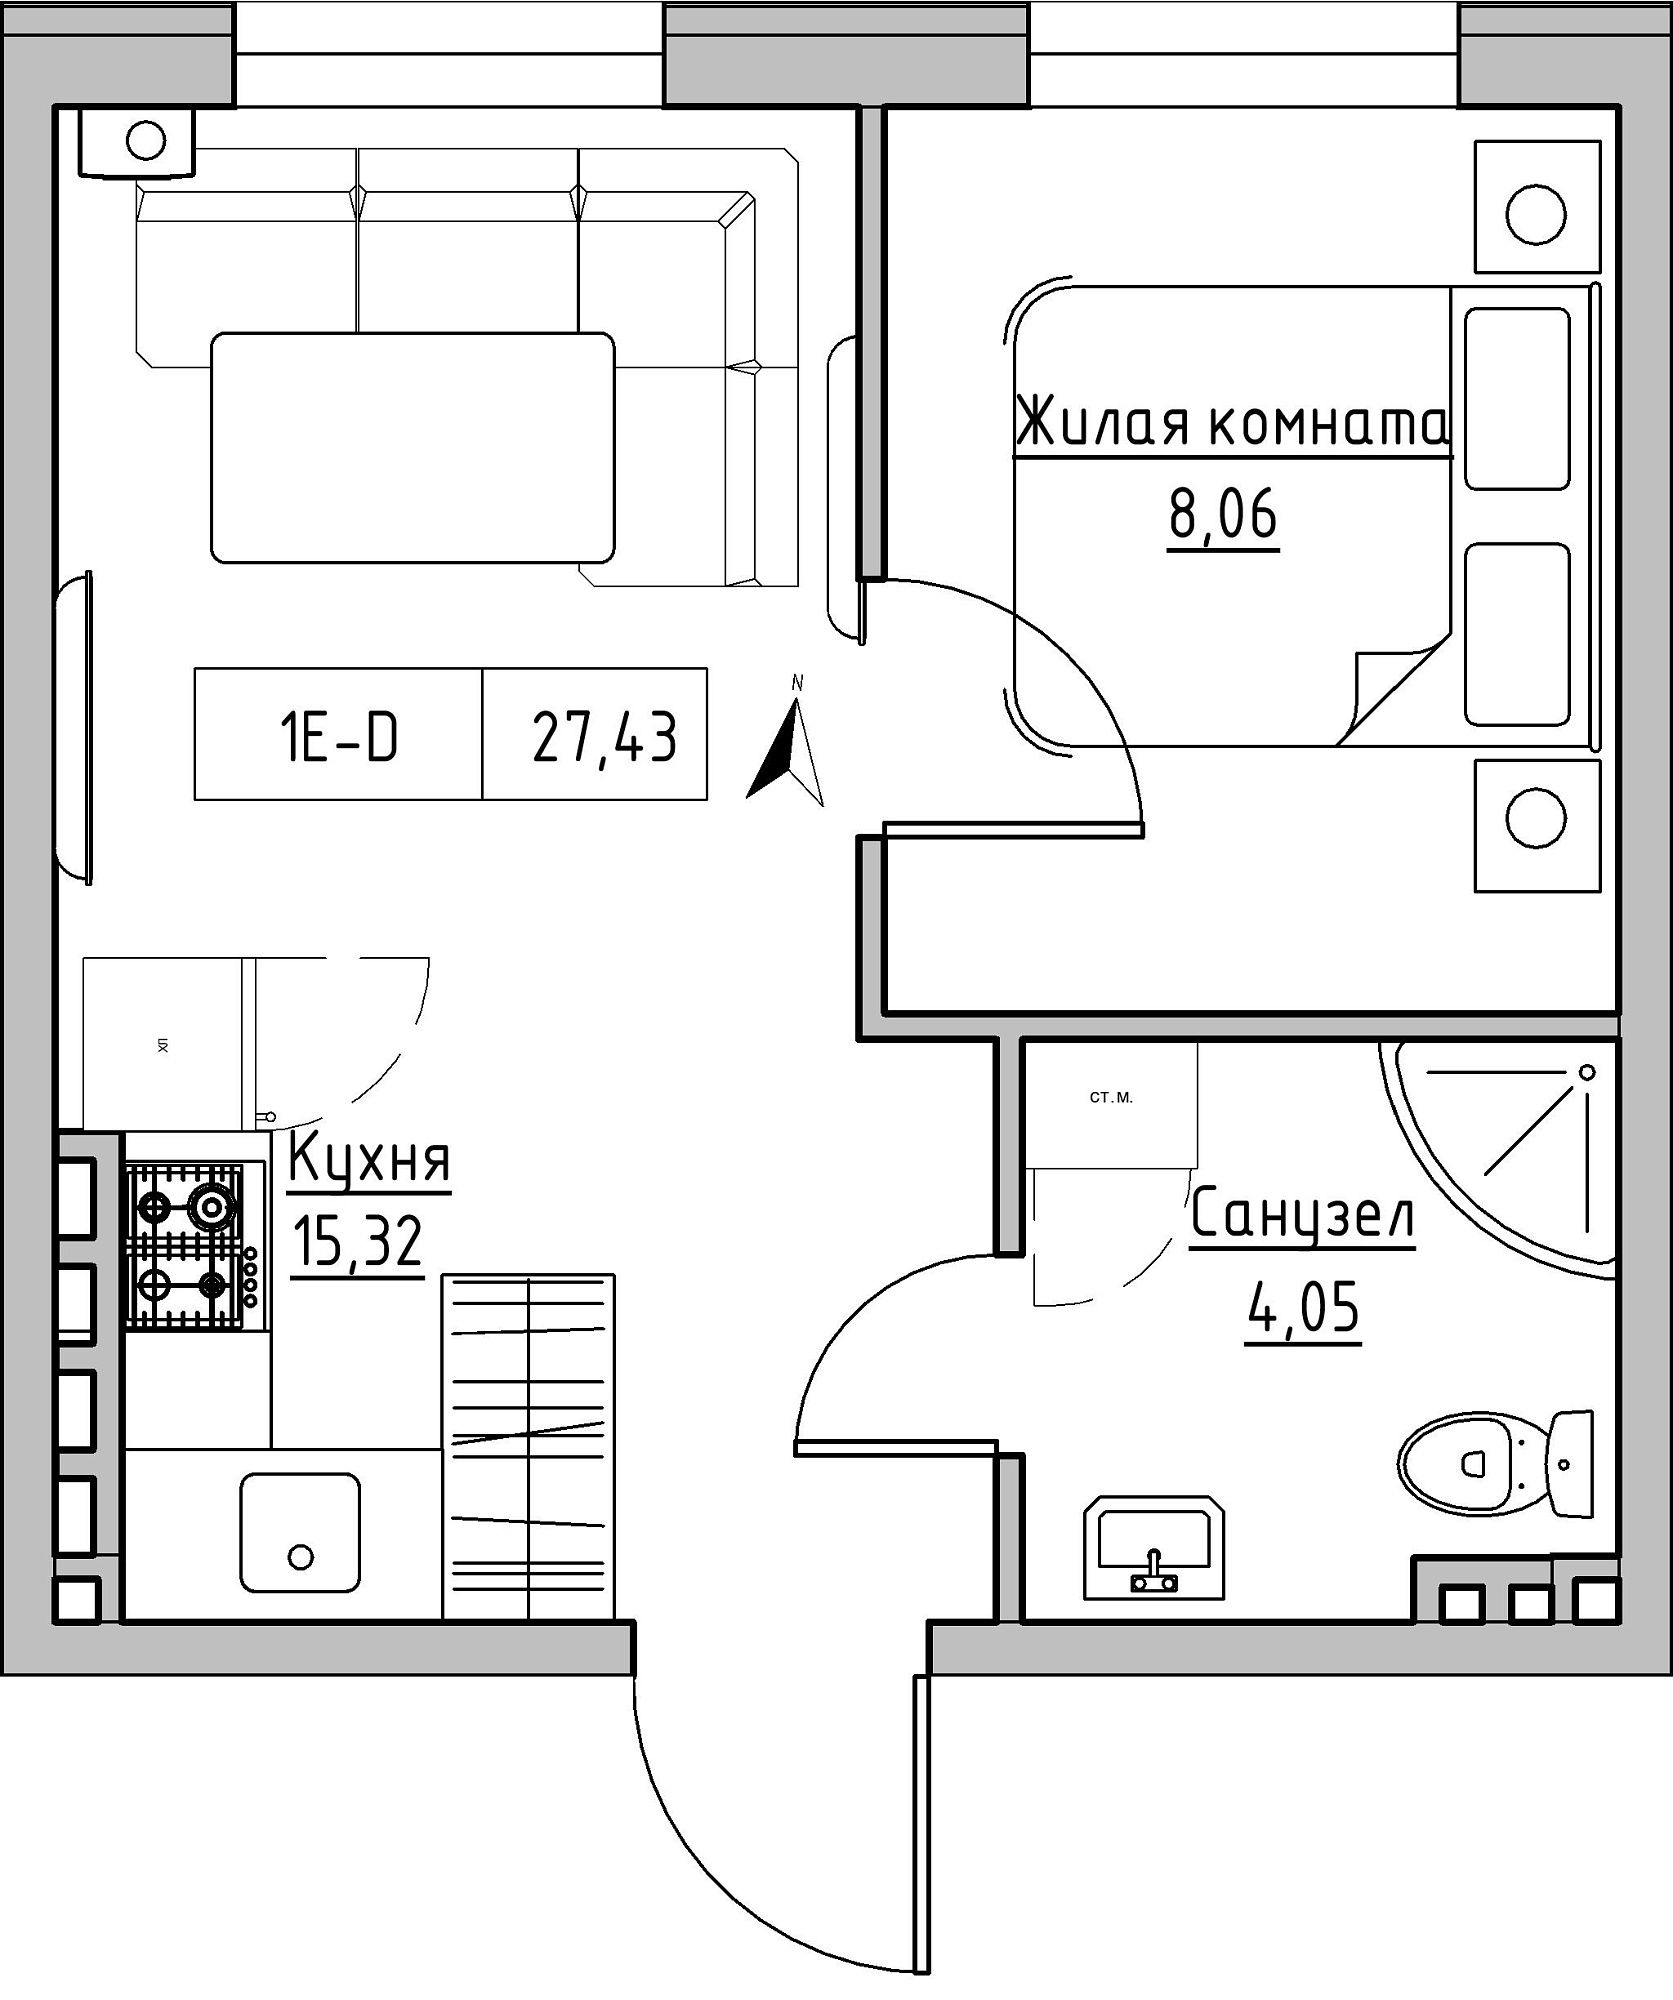 Planning 1-rm flats area 27.43m2, KS-024-04/0002.